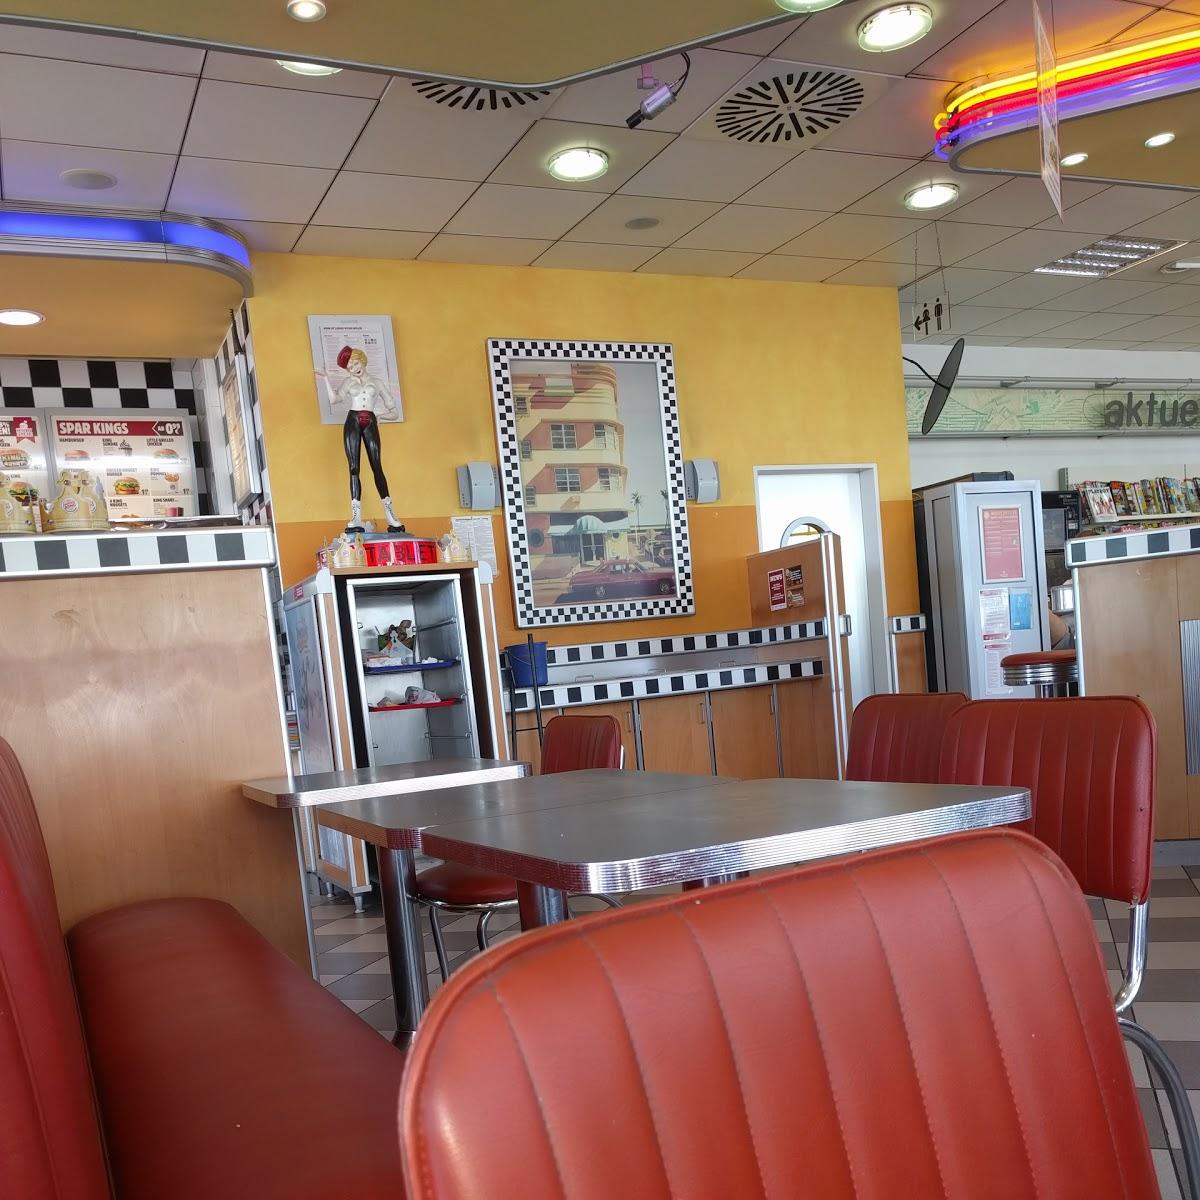 Restaurant "Burger King" in Andernach